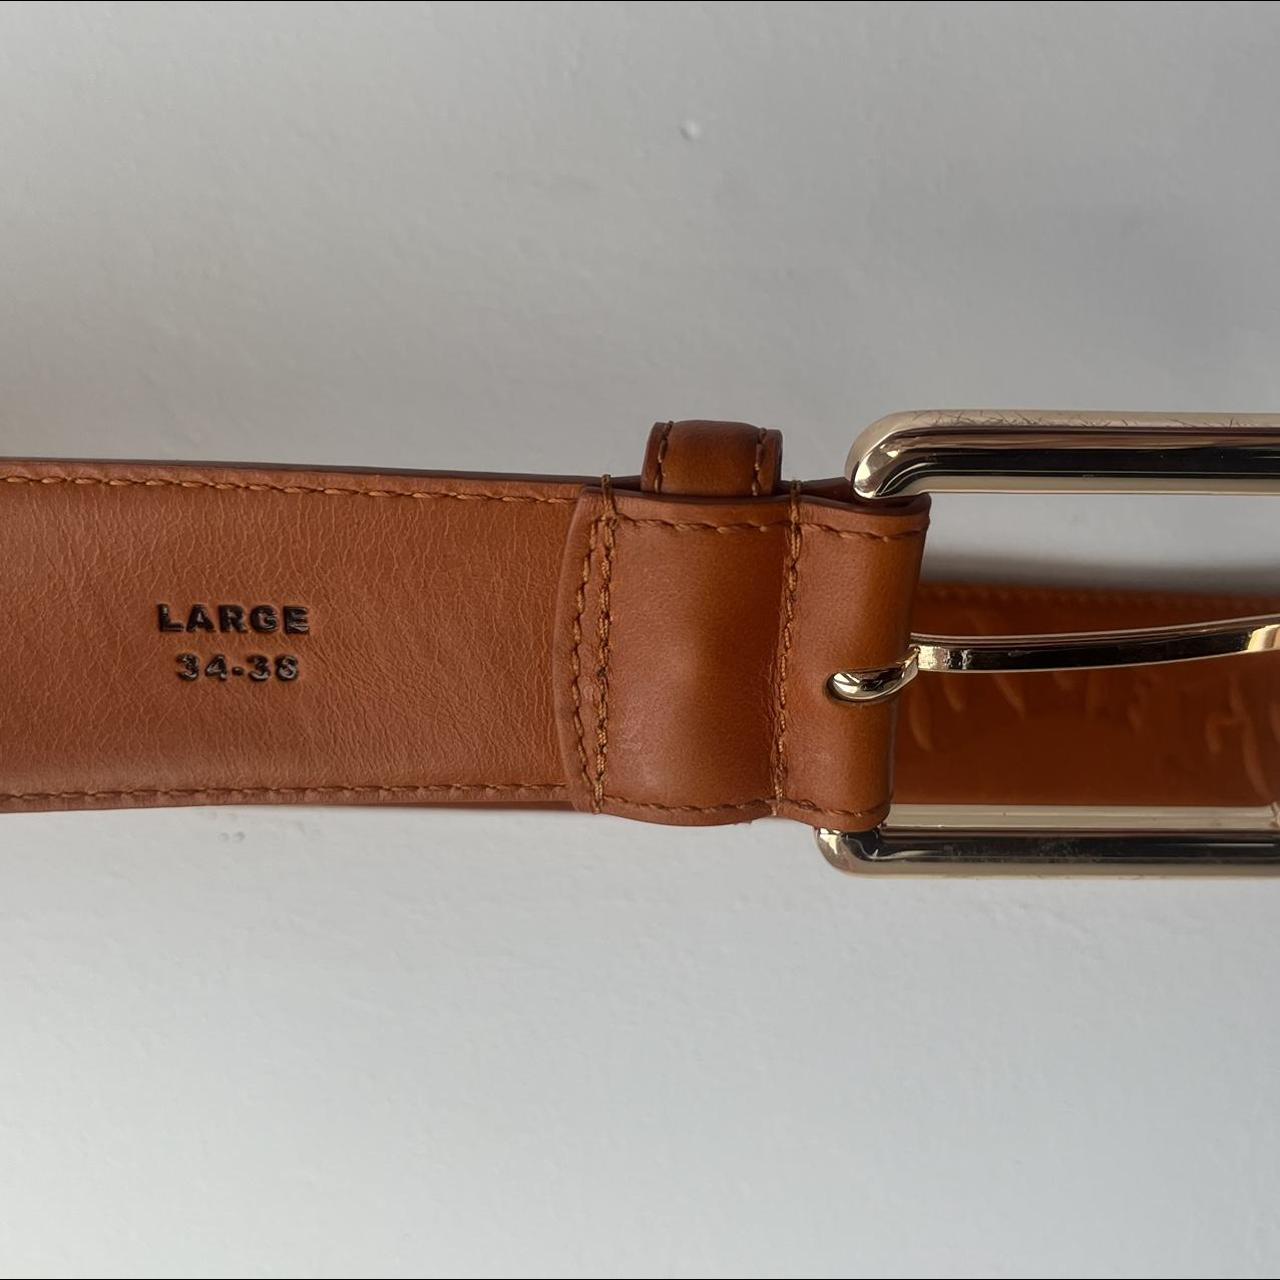 GOLF WANG Debossed 34-38 inch orange leather belt...